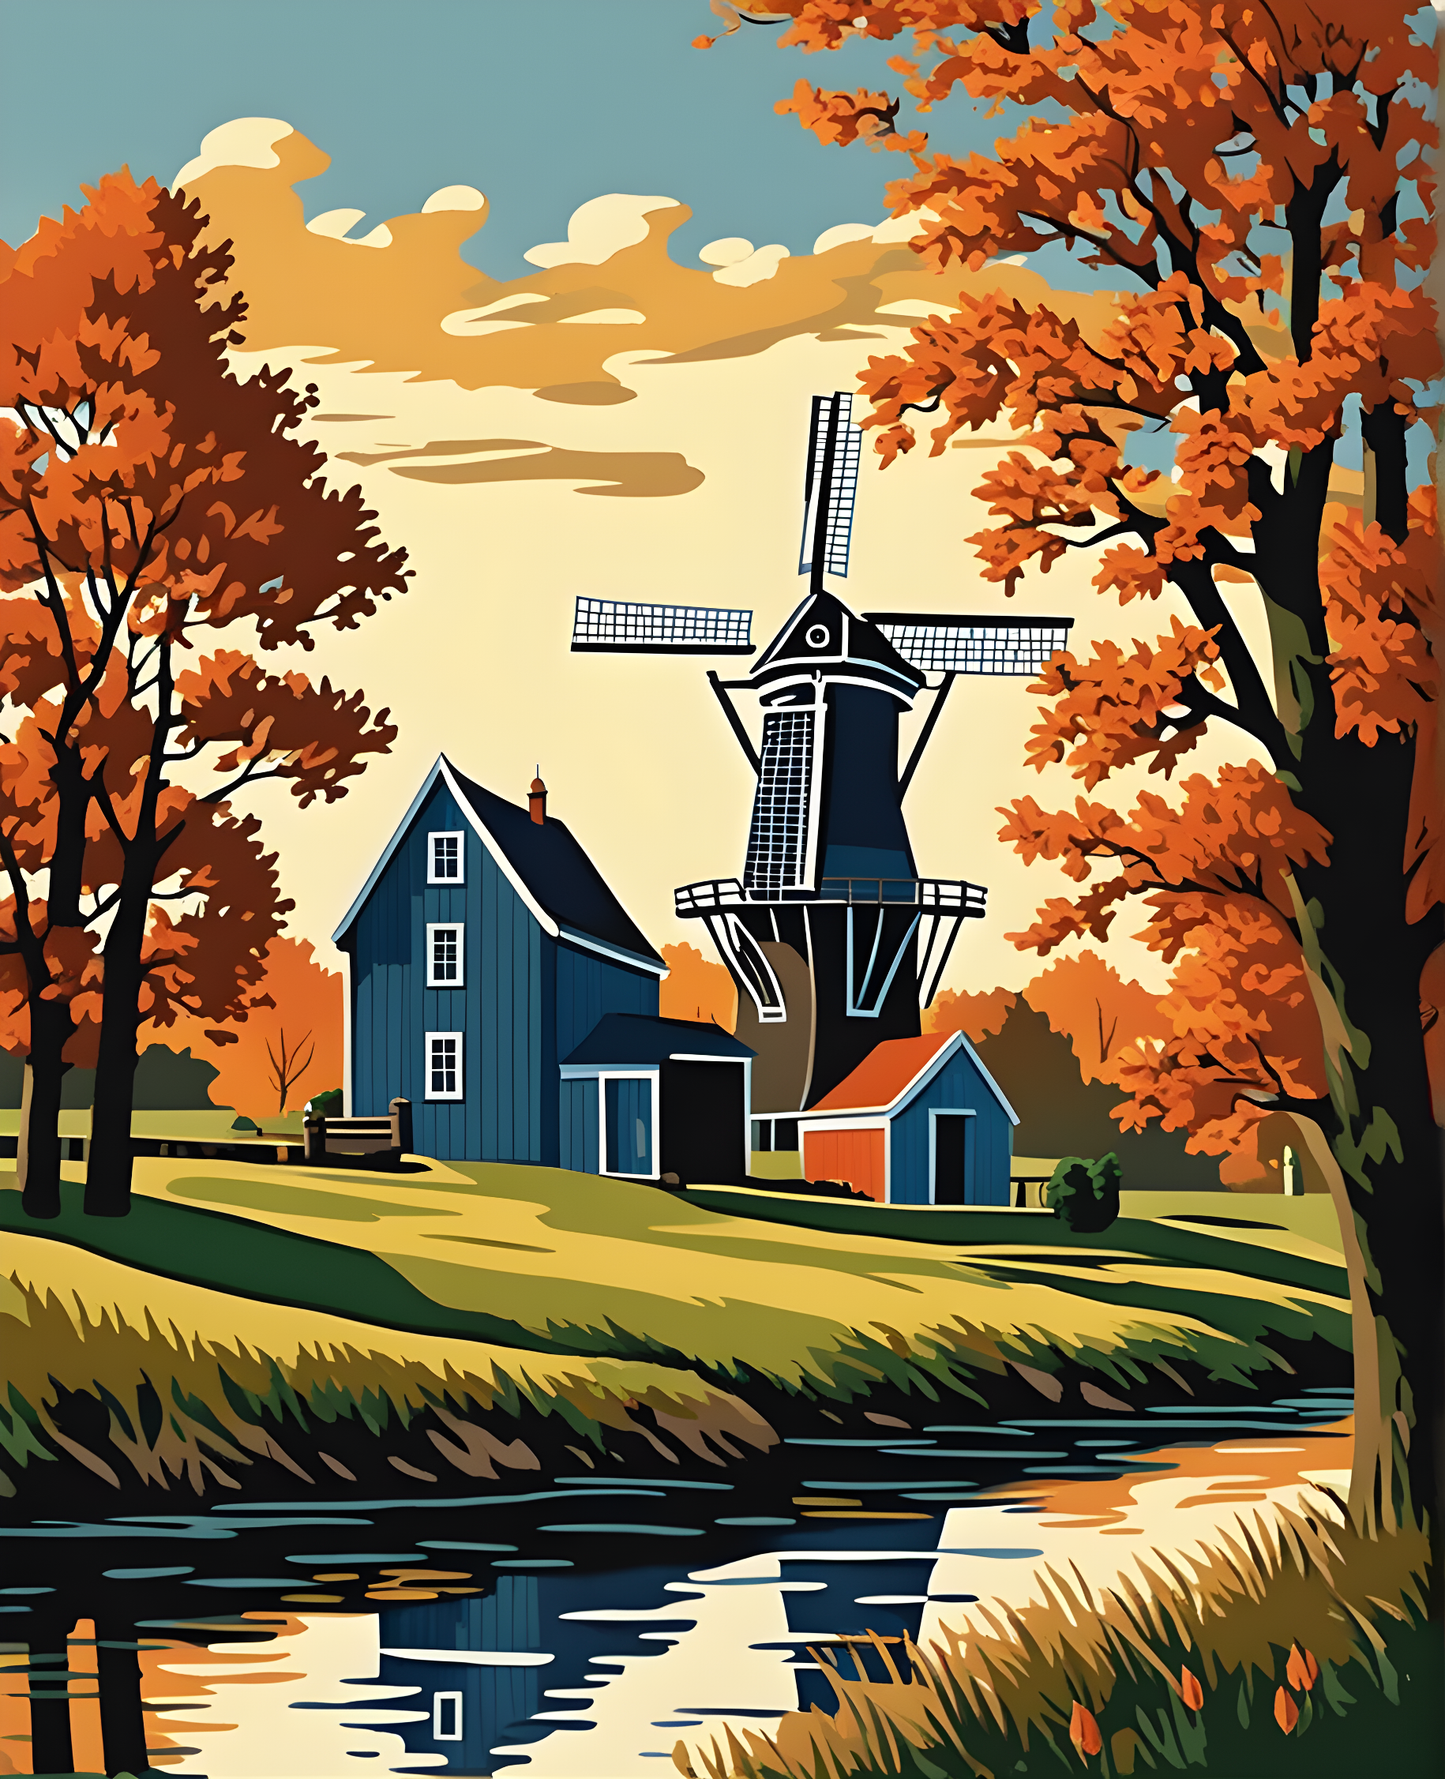 Riverside Windmill Landscape, Netherlands (2) - Van-Go Paint-By-Number Kit